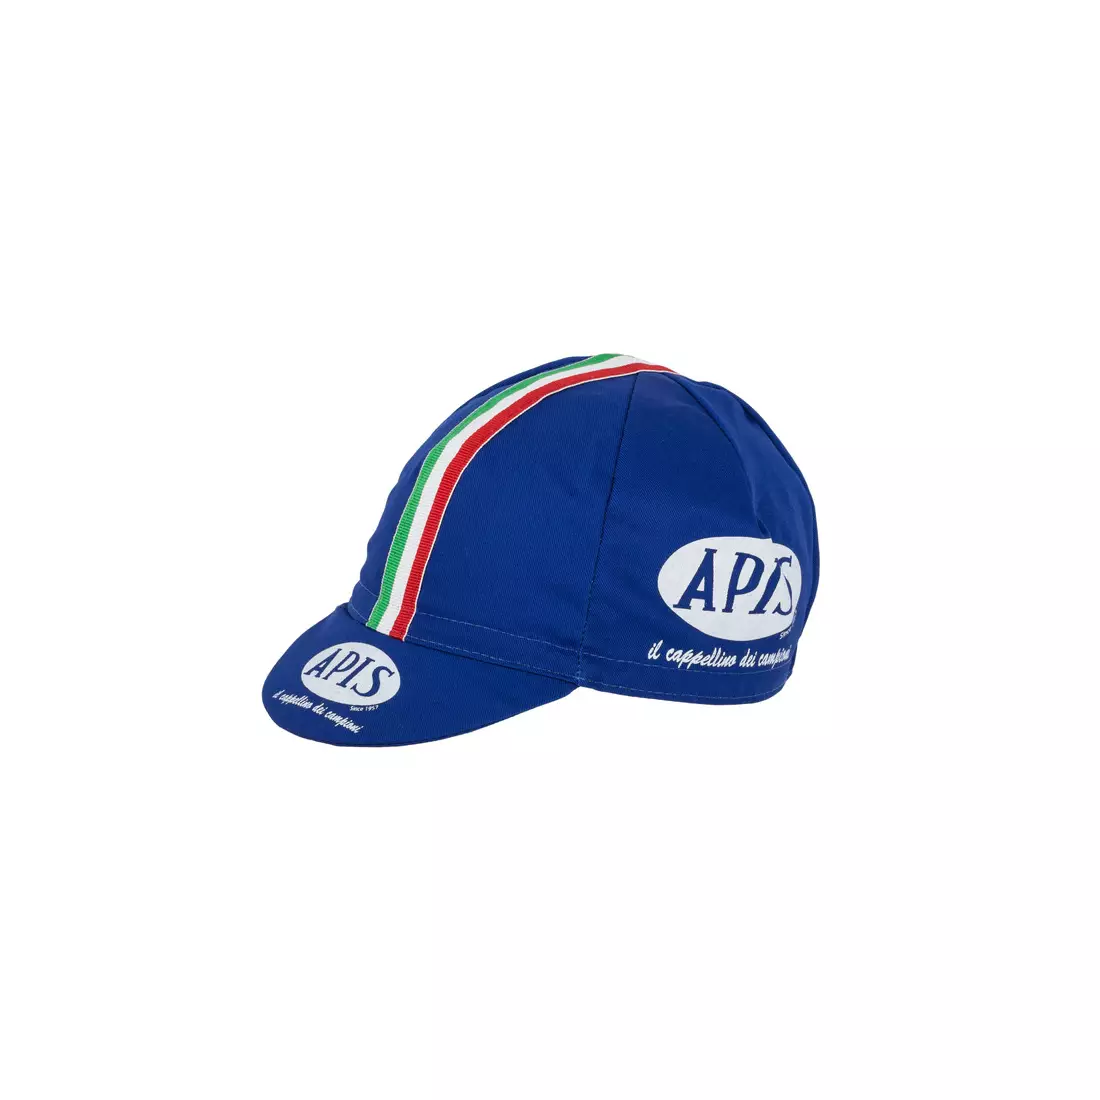 Apis Profi cycling cap APIS Il cappellino dei campioni blue